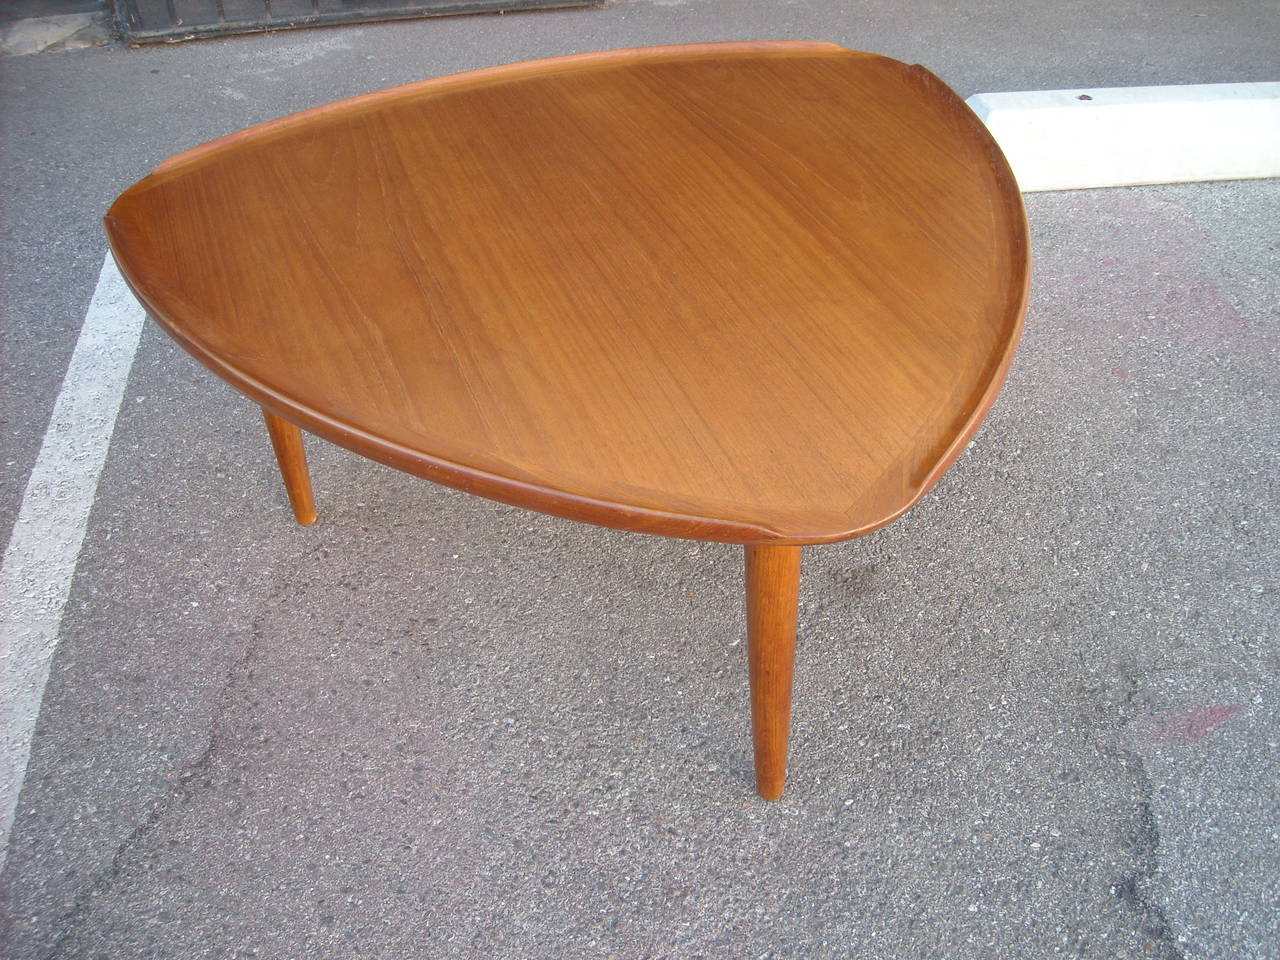 Very nice and elegant Danish modern coffee table.